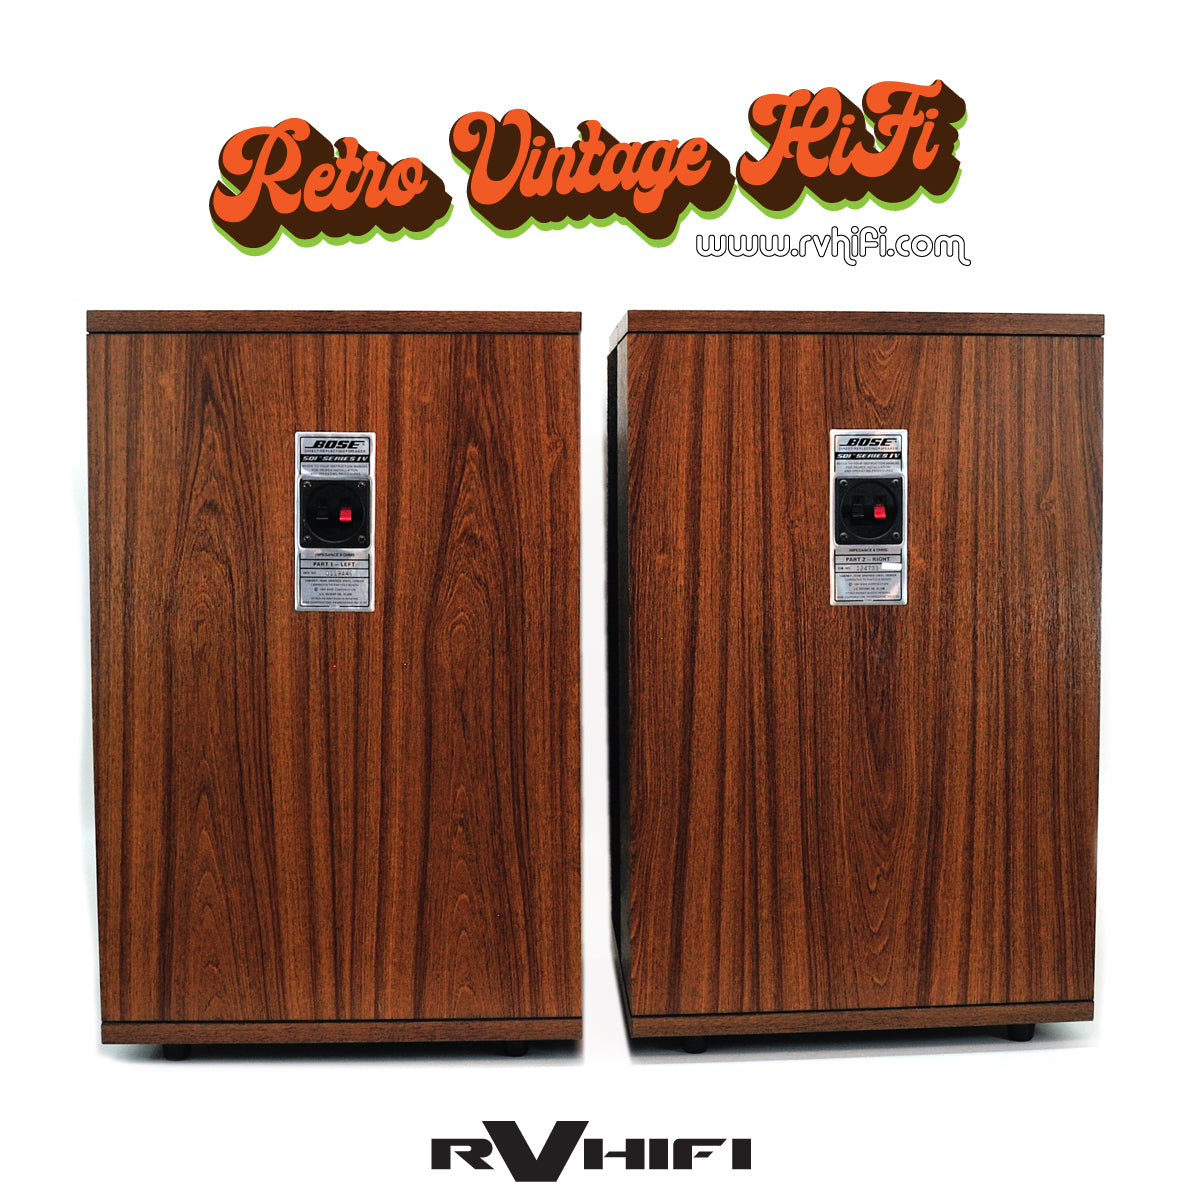 Bose 501 series IV Direct/Reflecting Speaker System